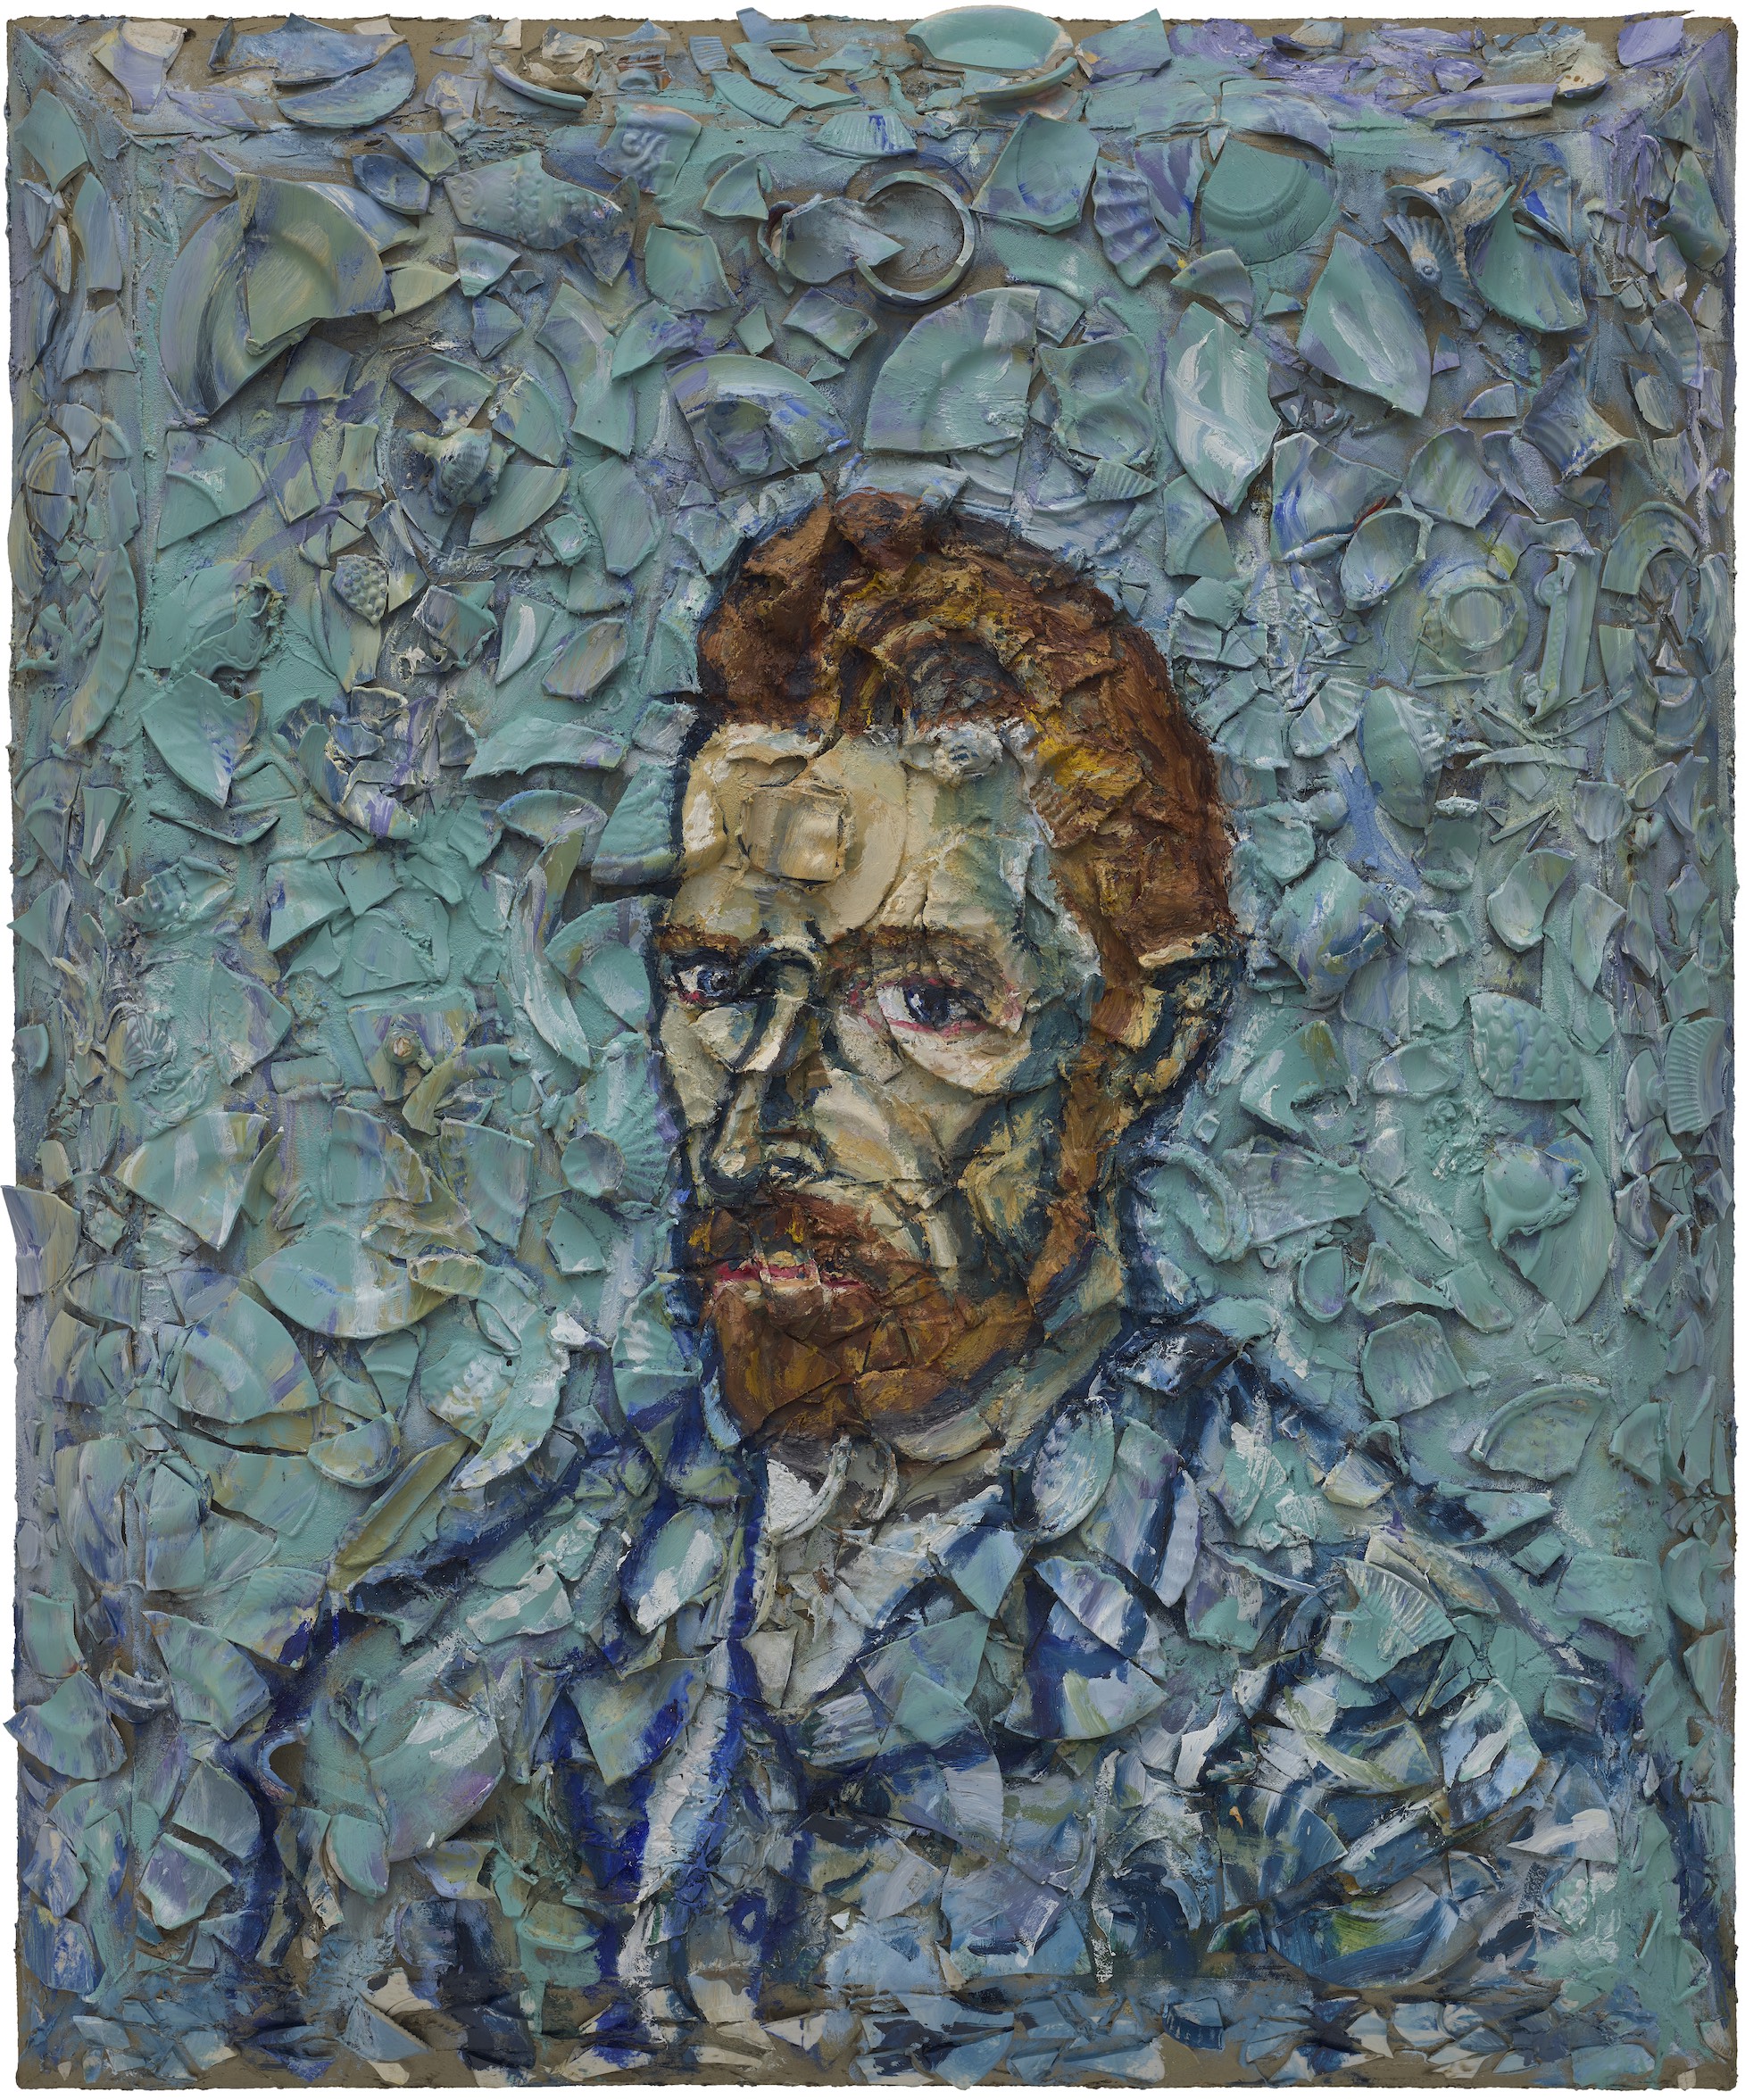 Number 1 (Van Gogh Self-Portrait Musee d'Orsay, Willem), 2019
